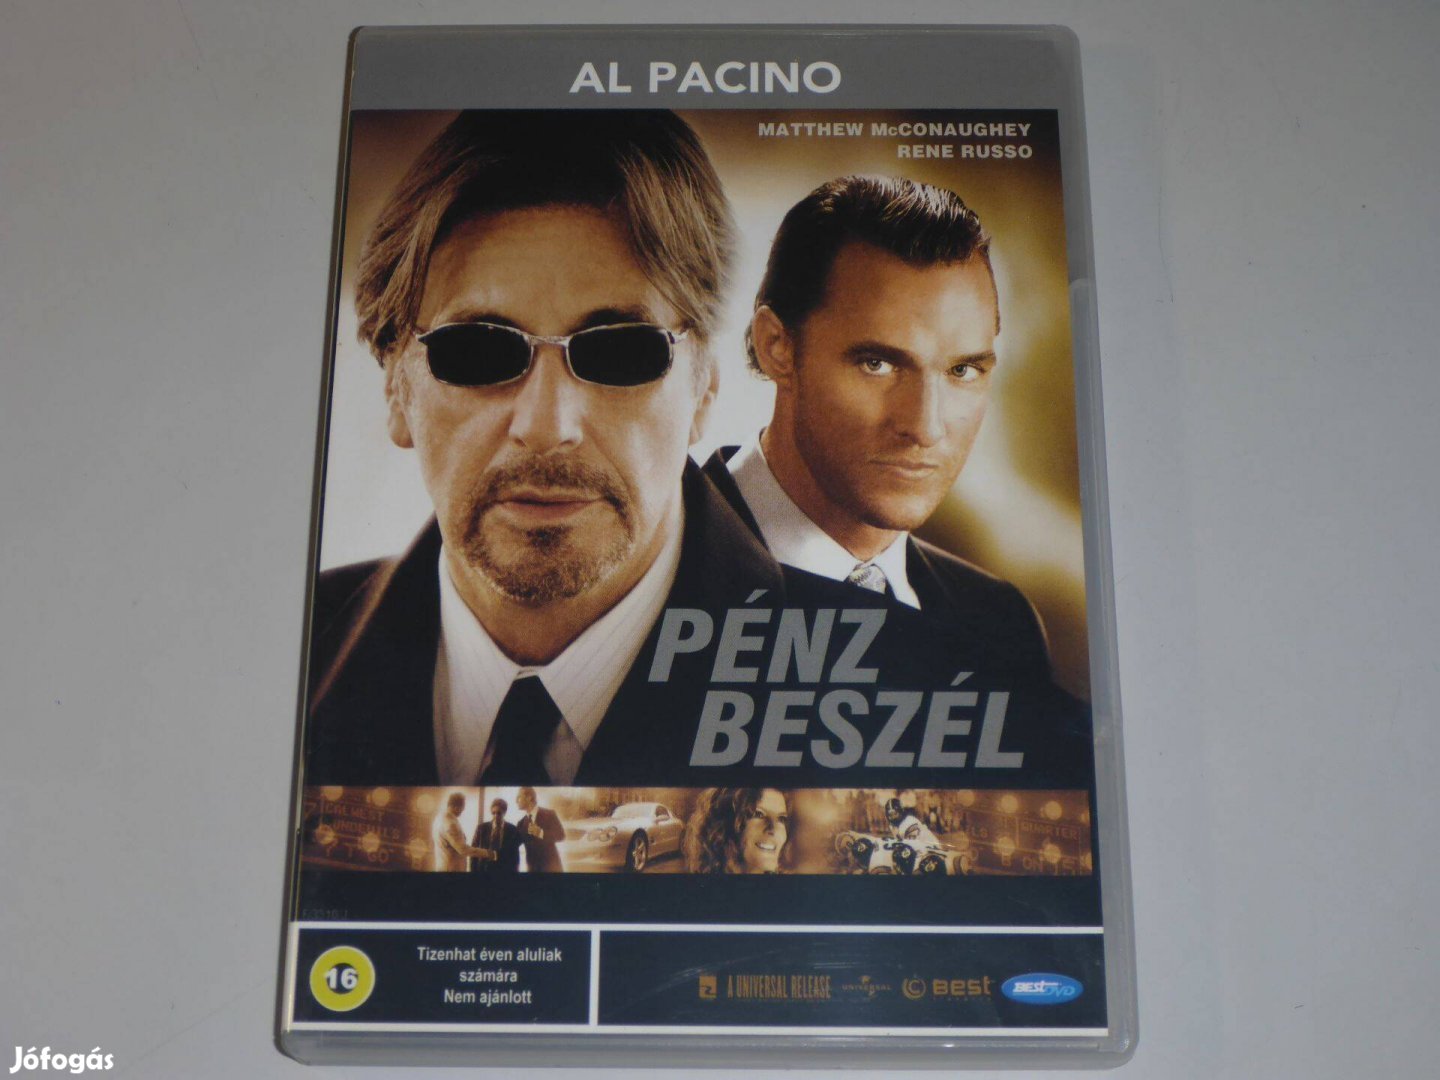 Pénz beszél (2005) DVD film "